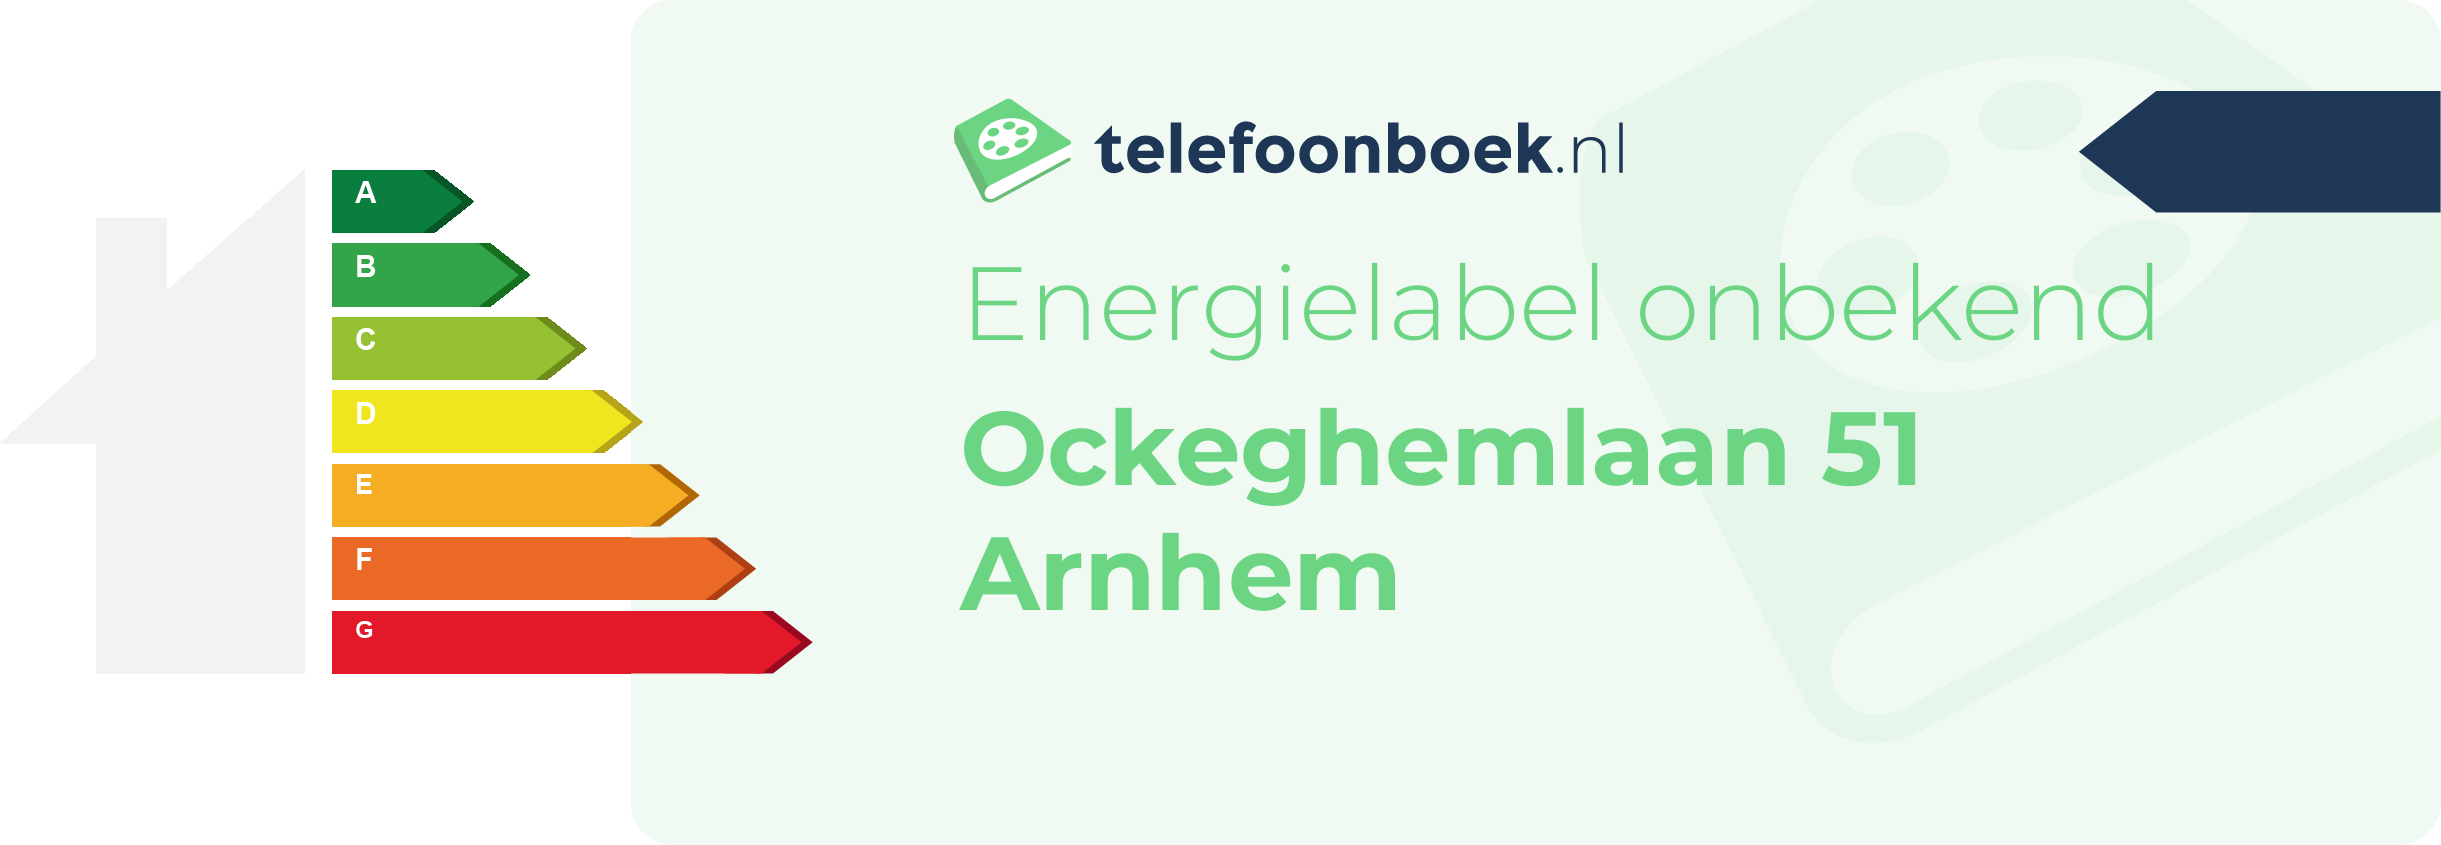 Energielabel Ockeghemlaan 51 Arnhem